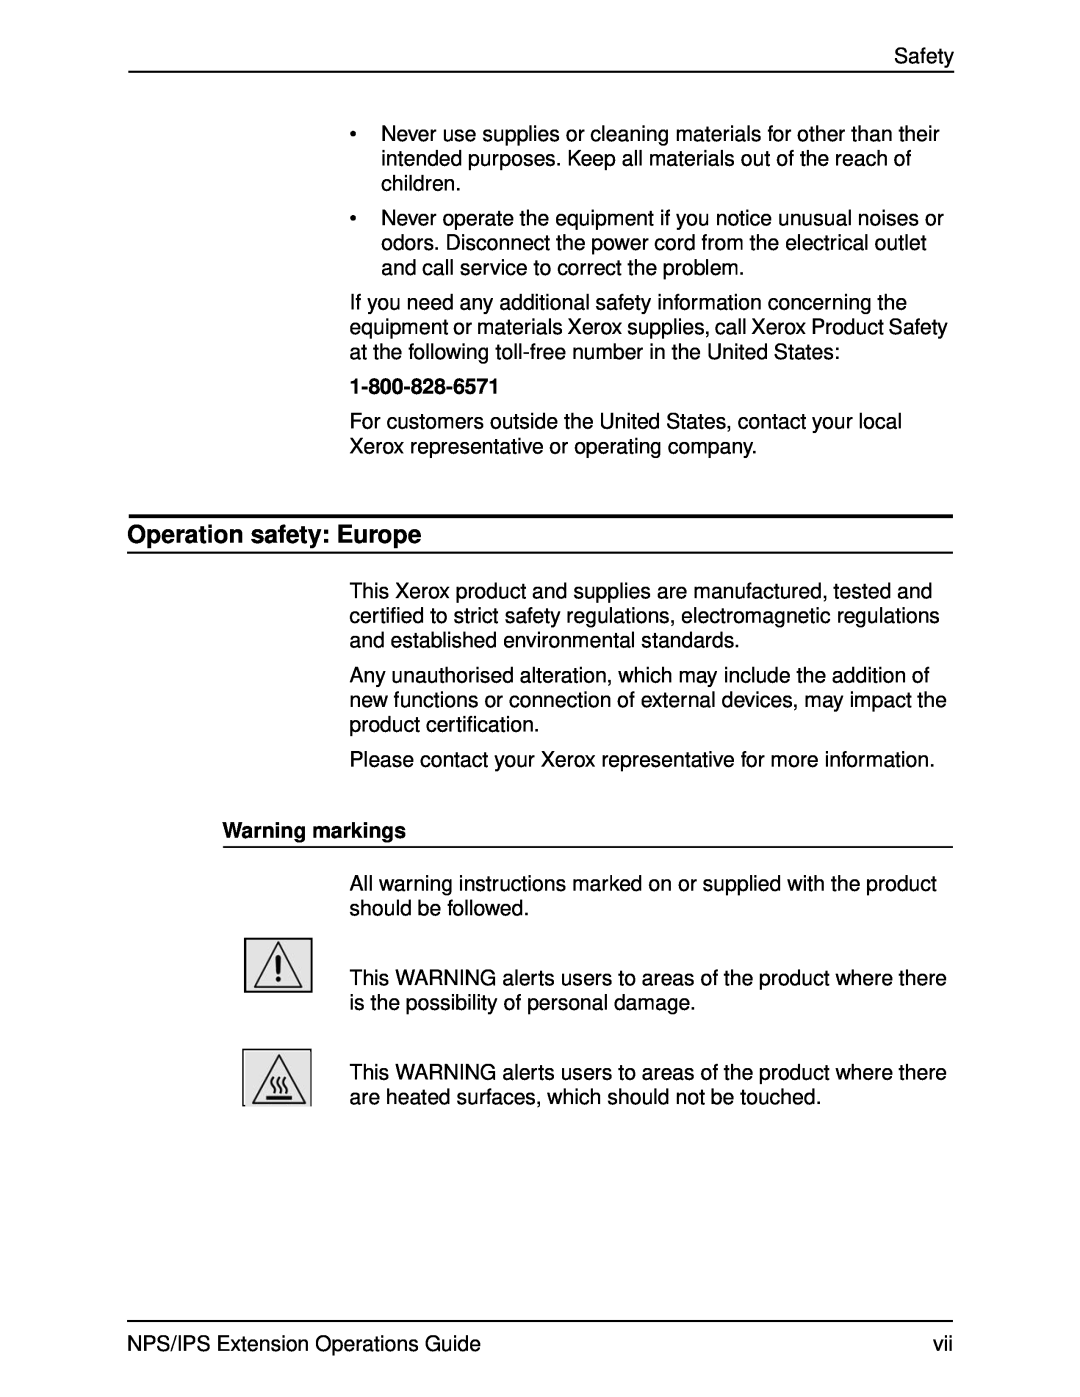 Xerox 2000 Series manual Operation safety Europe, Warning markings 